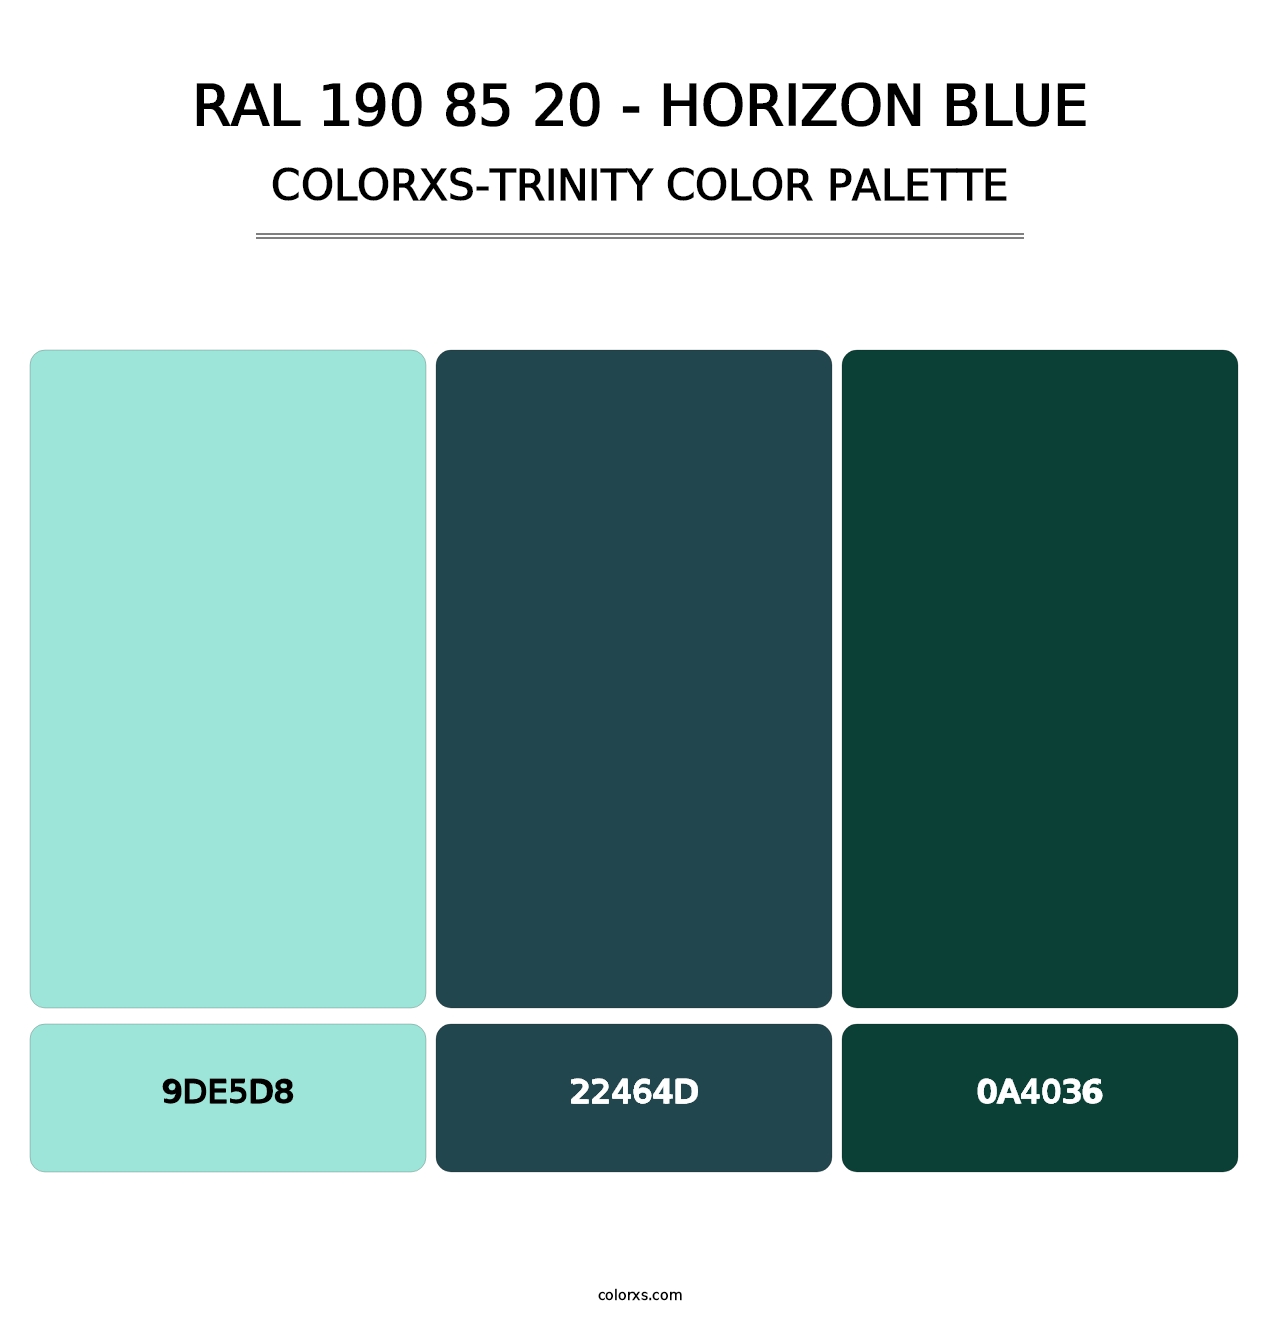 RAL 190 85 20 - Horizon Blue - Colorxs Trinity Palette